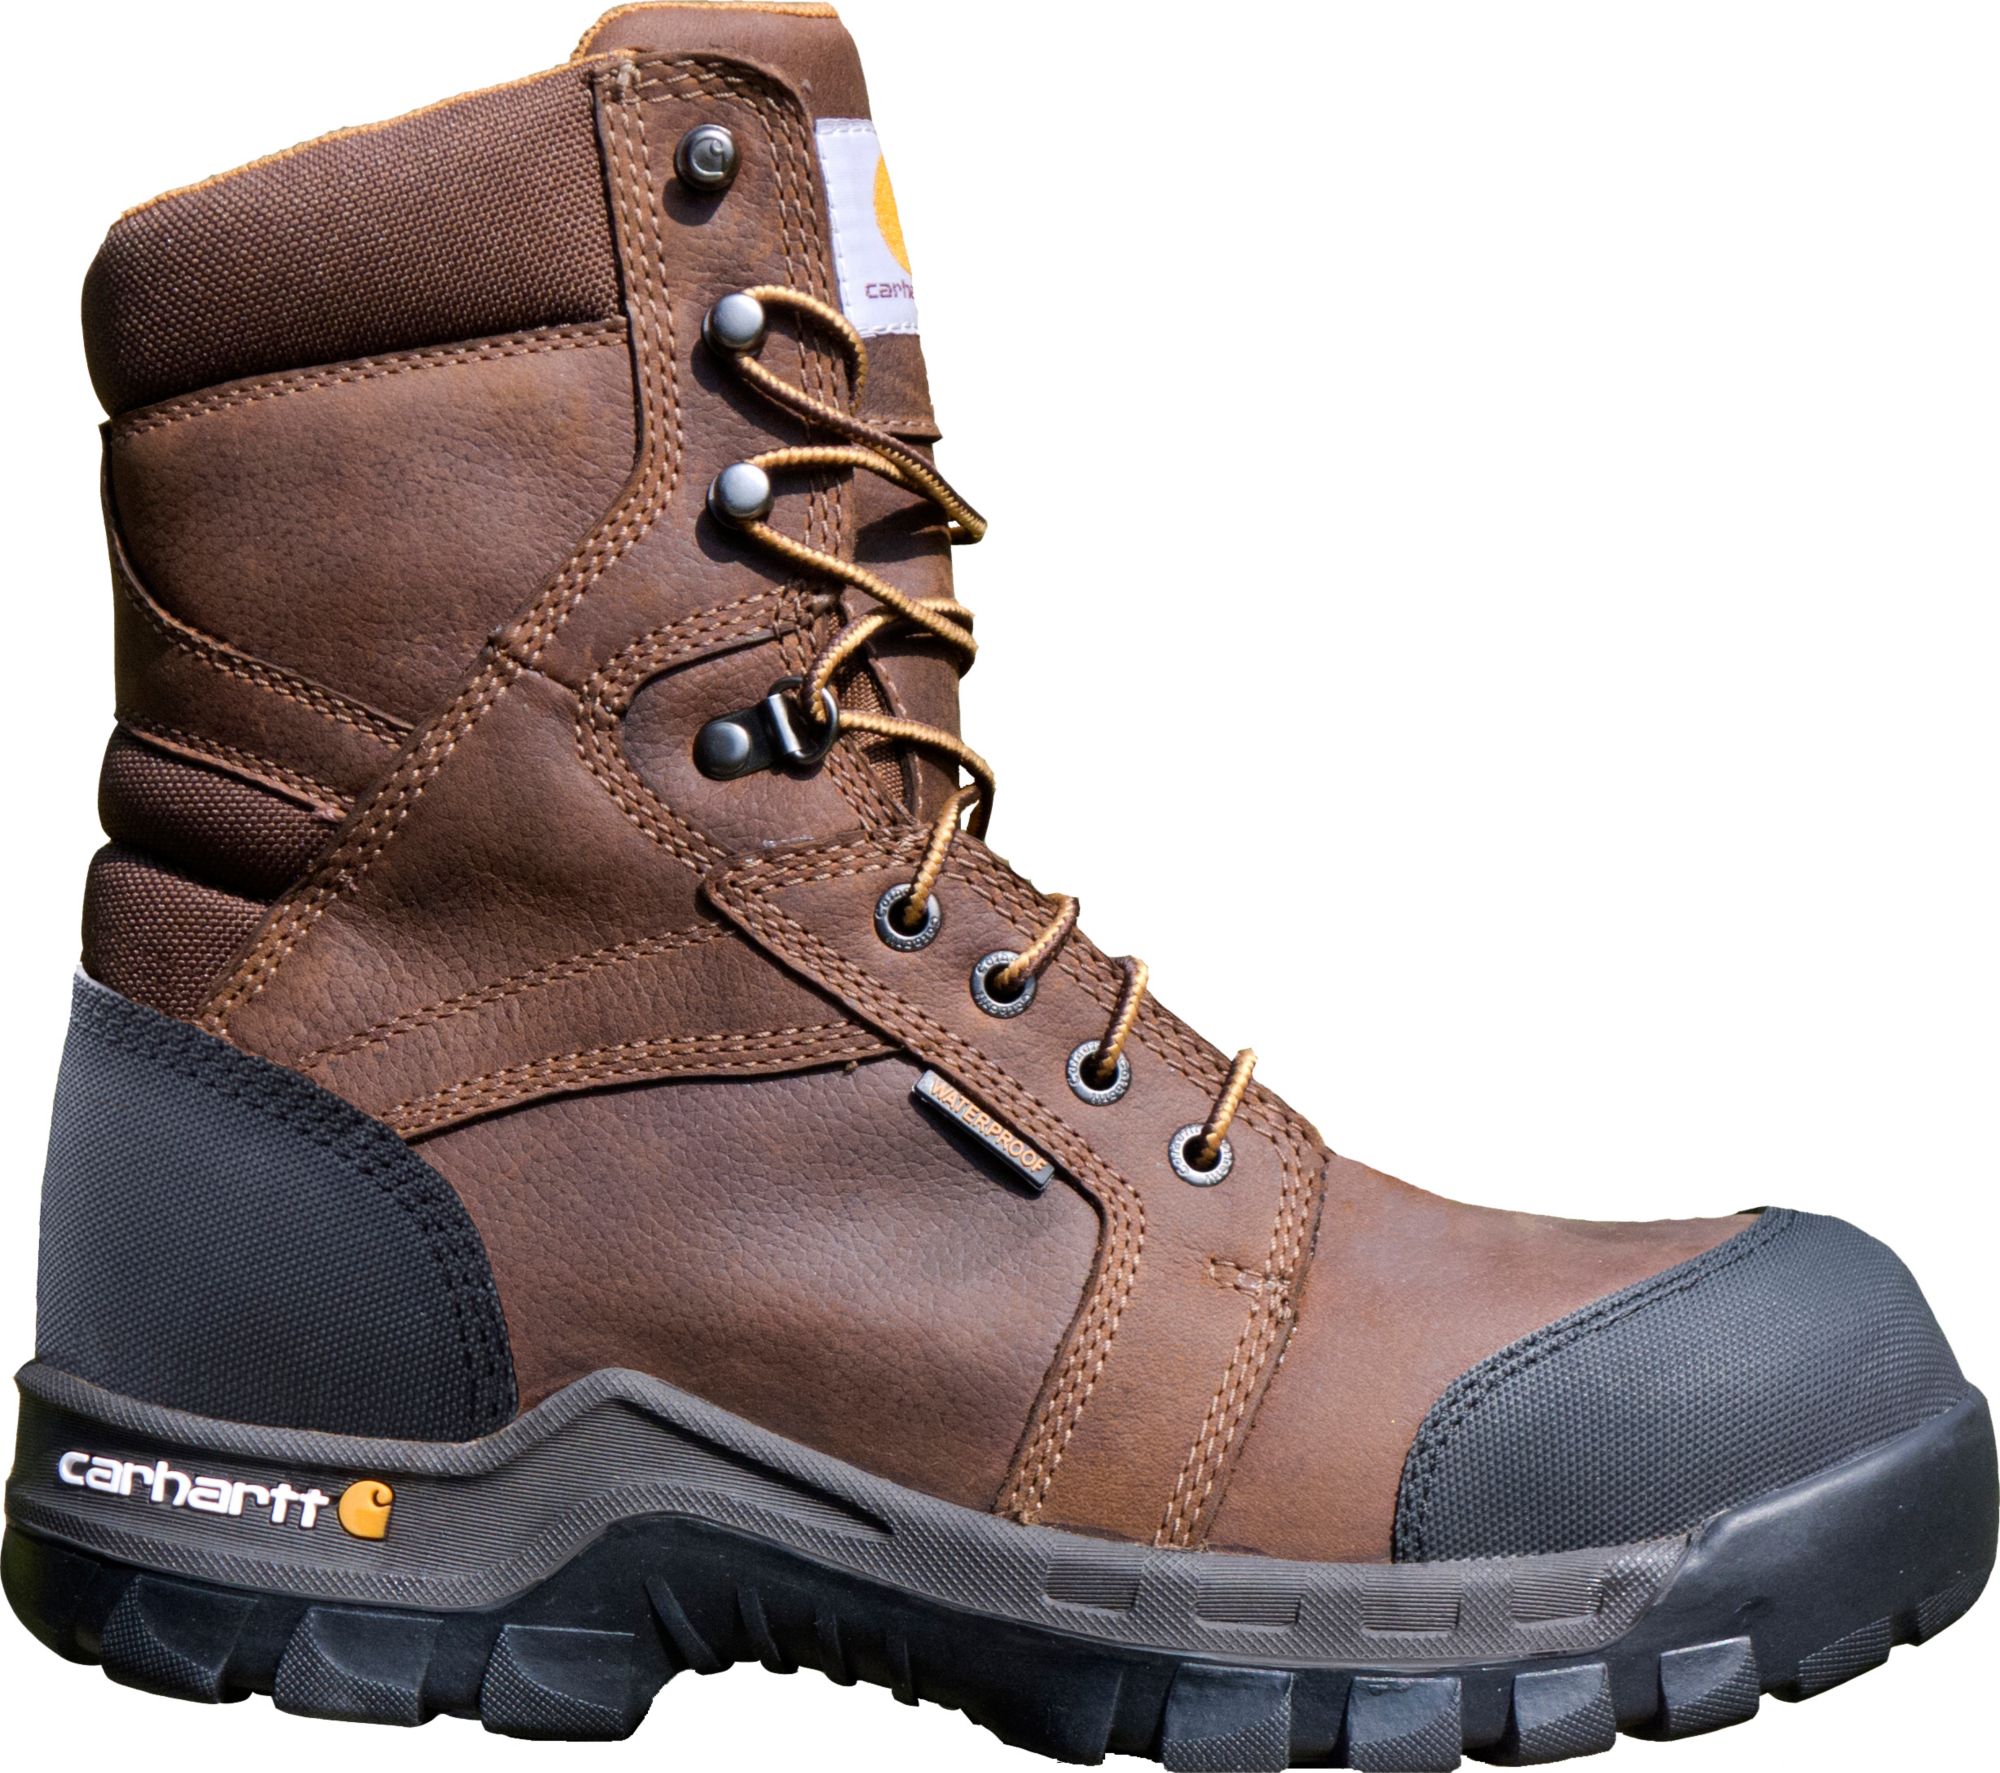 Carhartt Men's Rugged Flex 8” Composite Toe Waterproof Work Boots